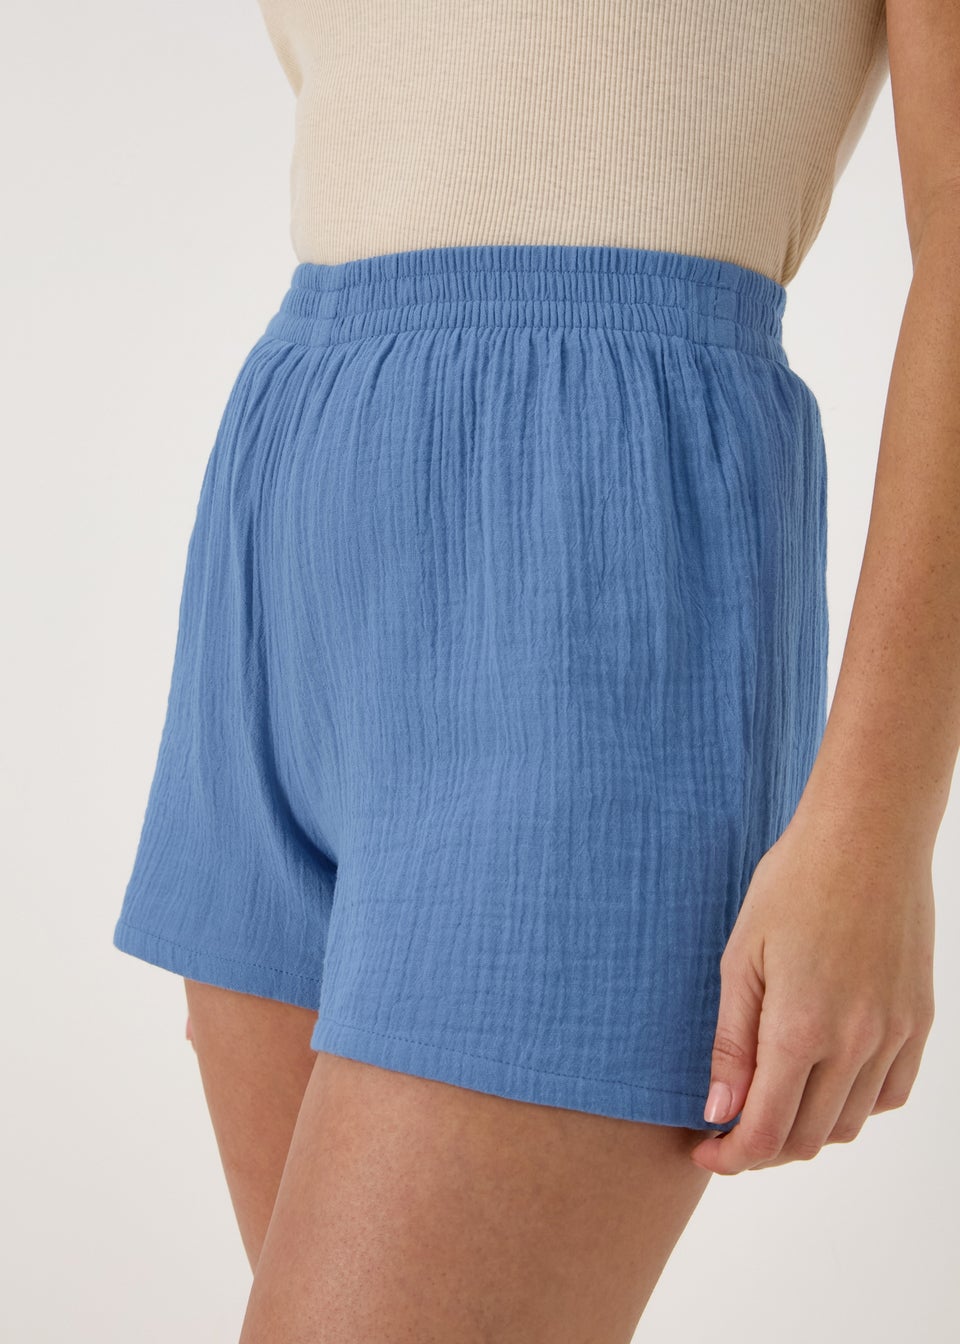 Blue Textured Cotton Shorts